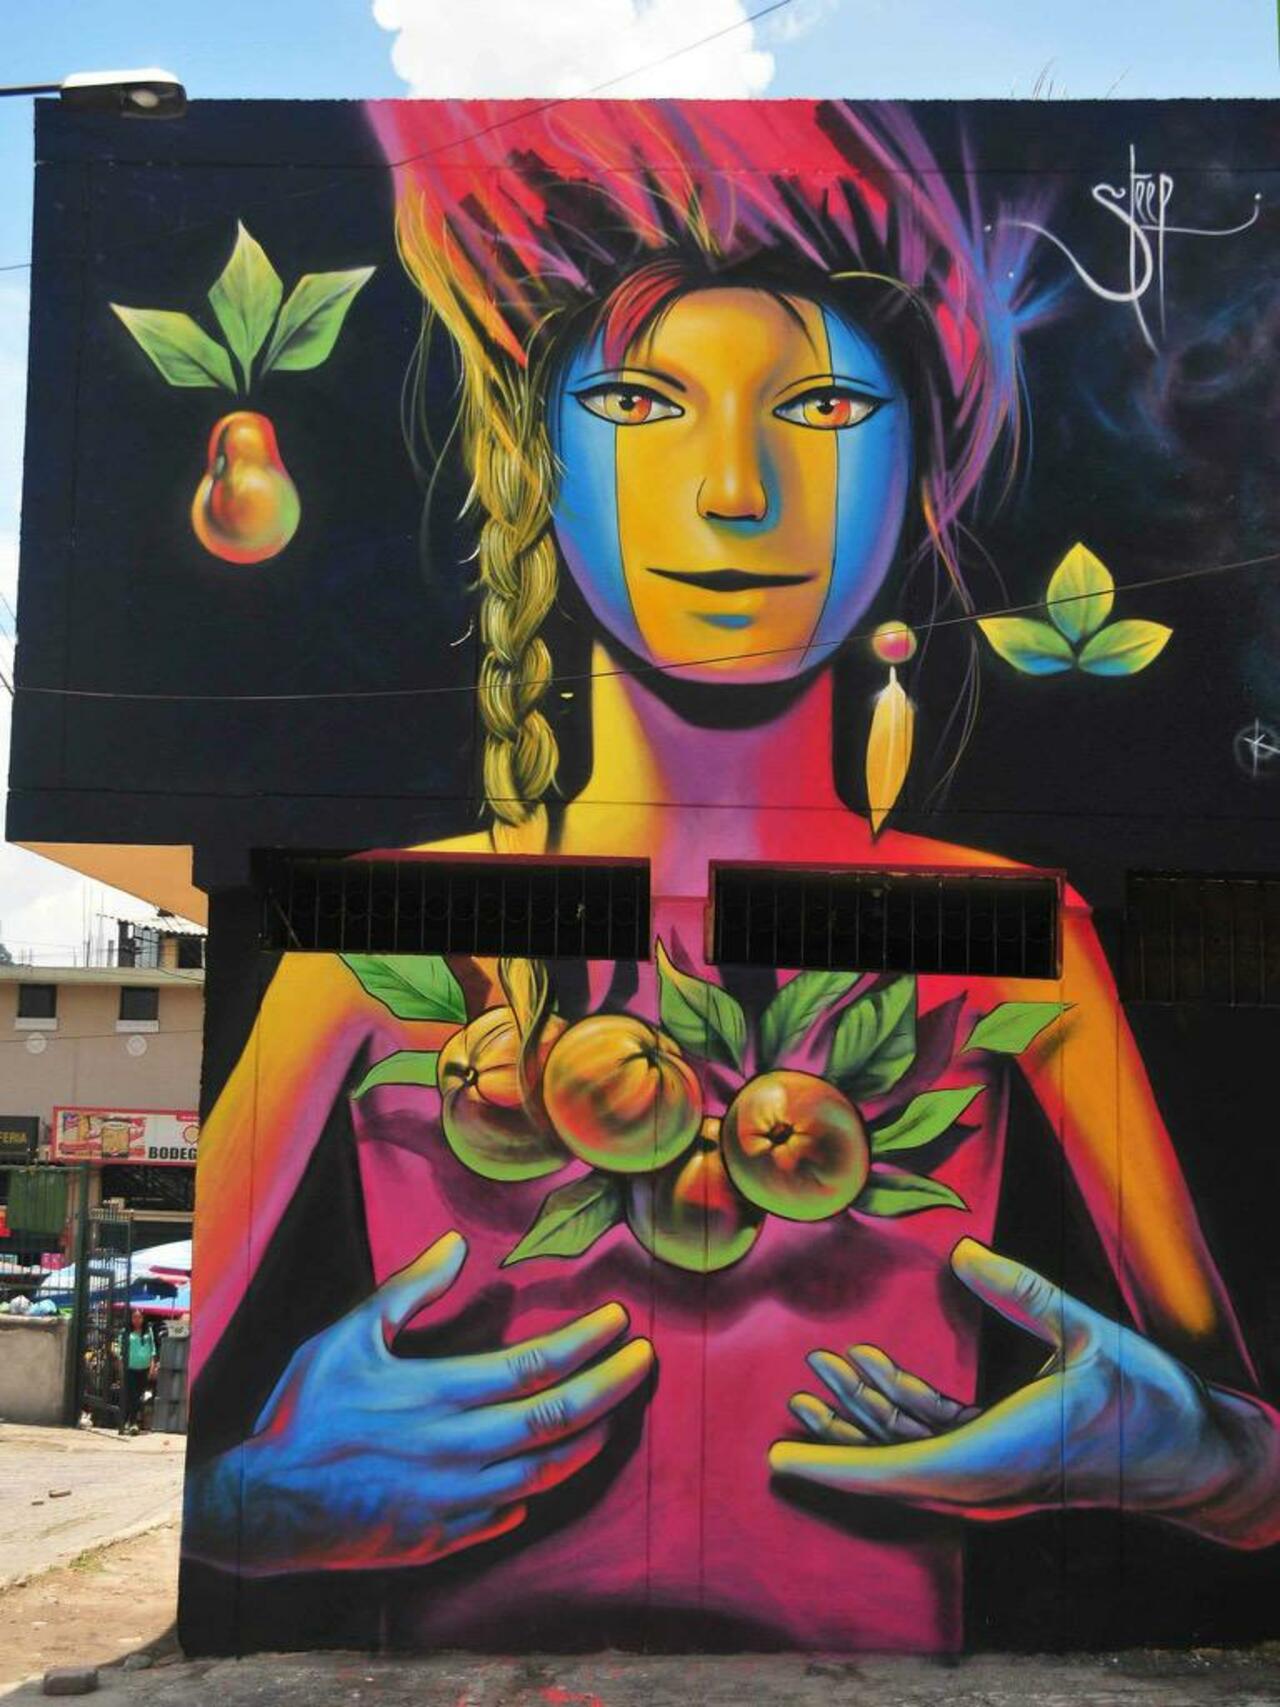 RT belilac "RT belilac "RT belilac "RT belilac "Street Art by Steep

#art #graffiti #mural #streetart http://t.co/geLfOtbr4c""""